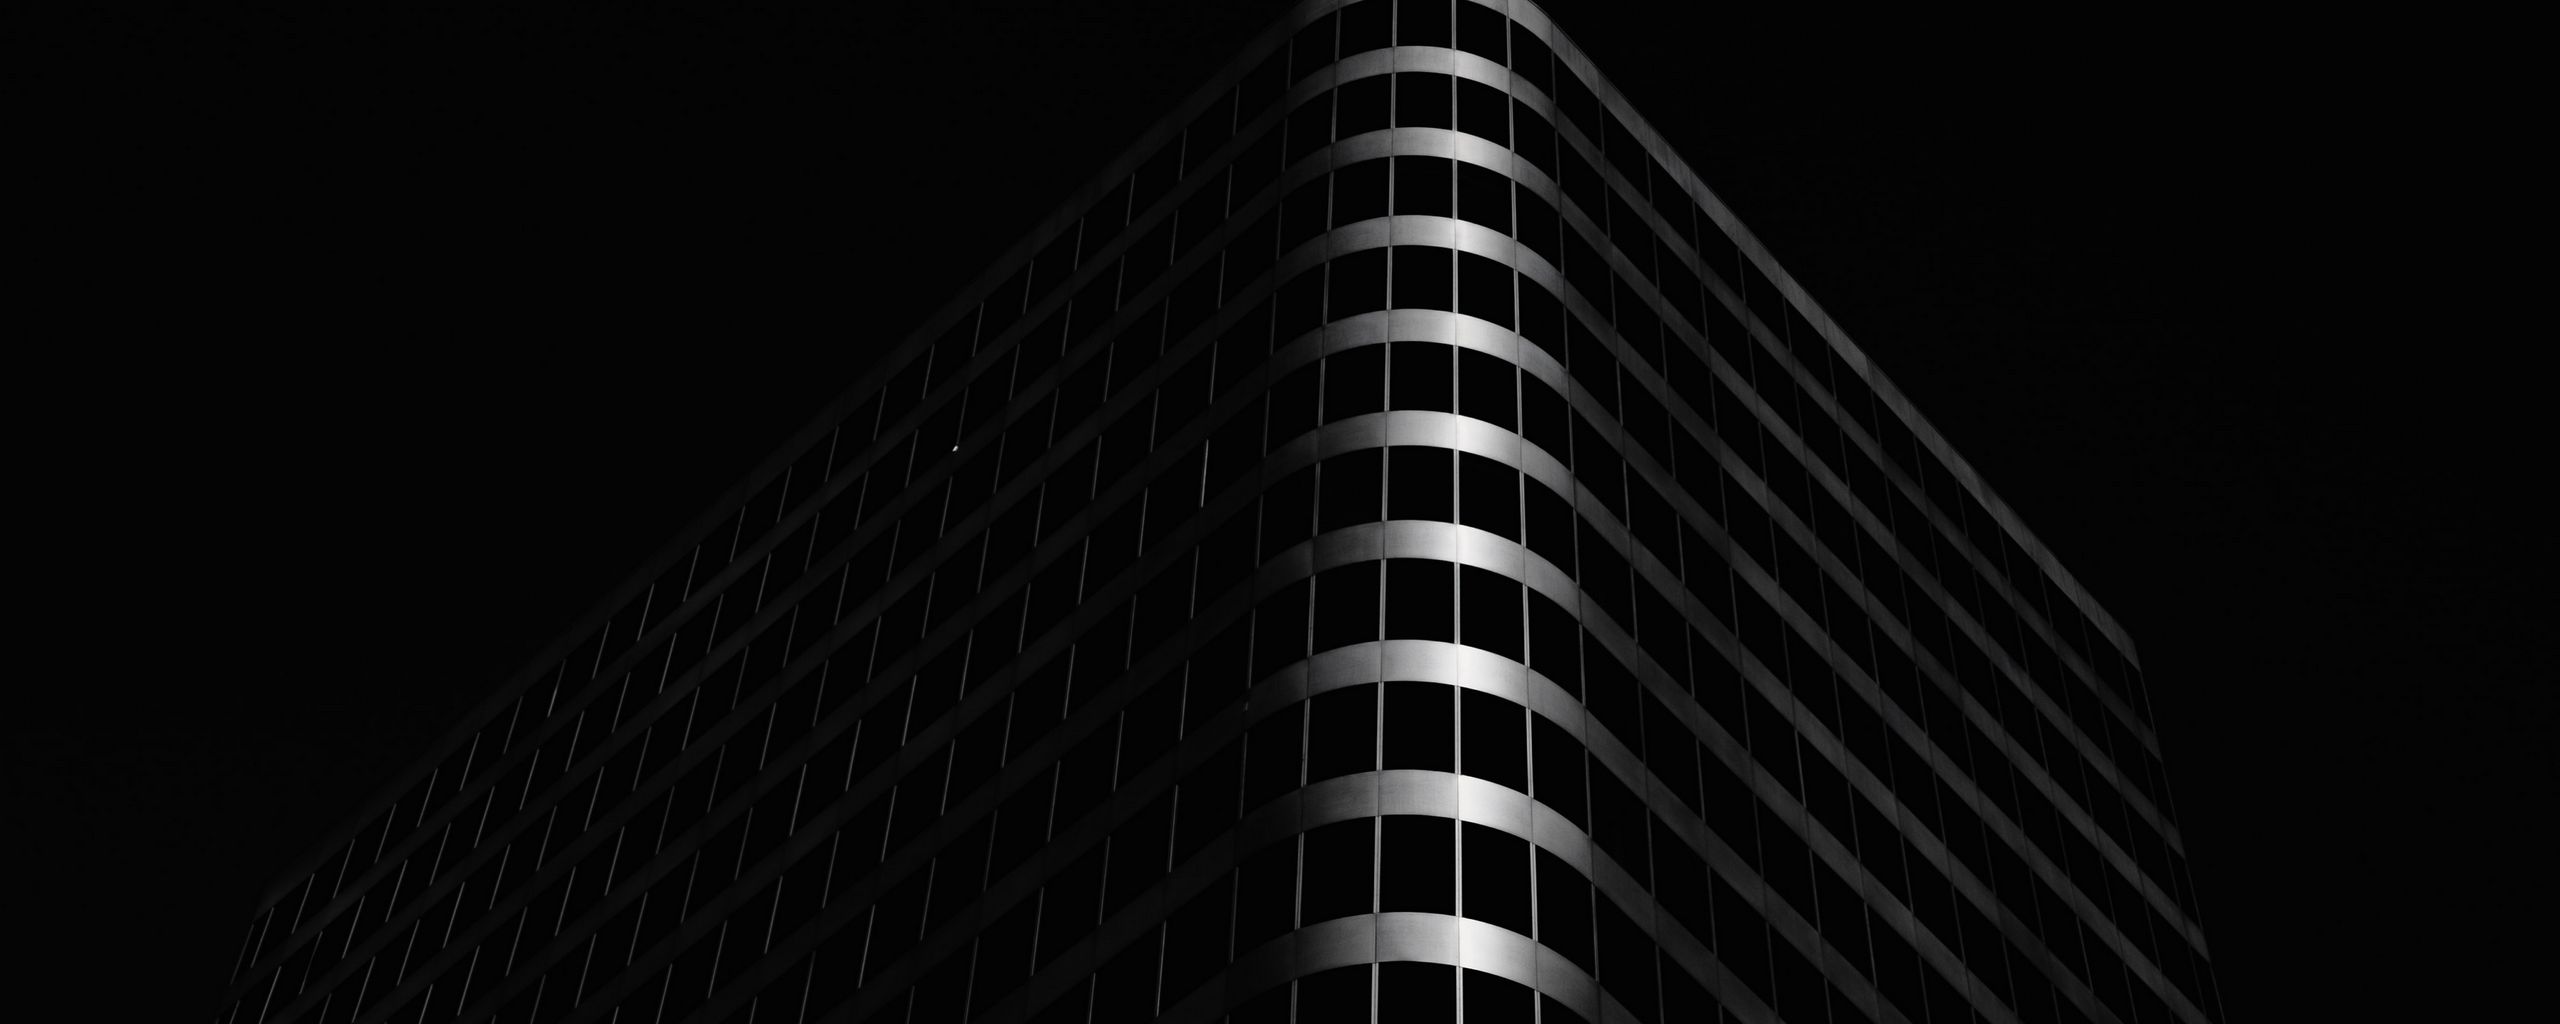 2560x1024 Wallpaper building, architecture, black, dark